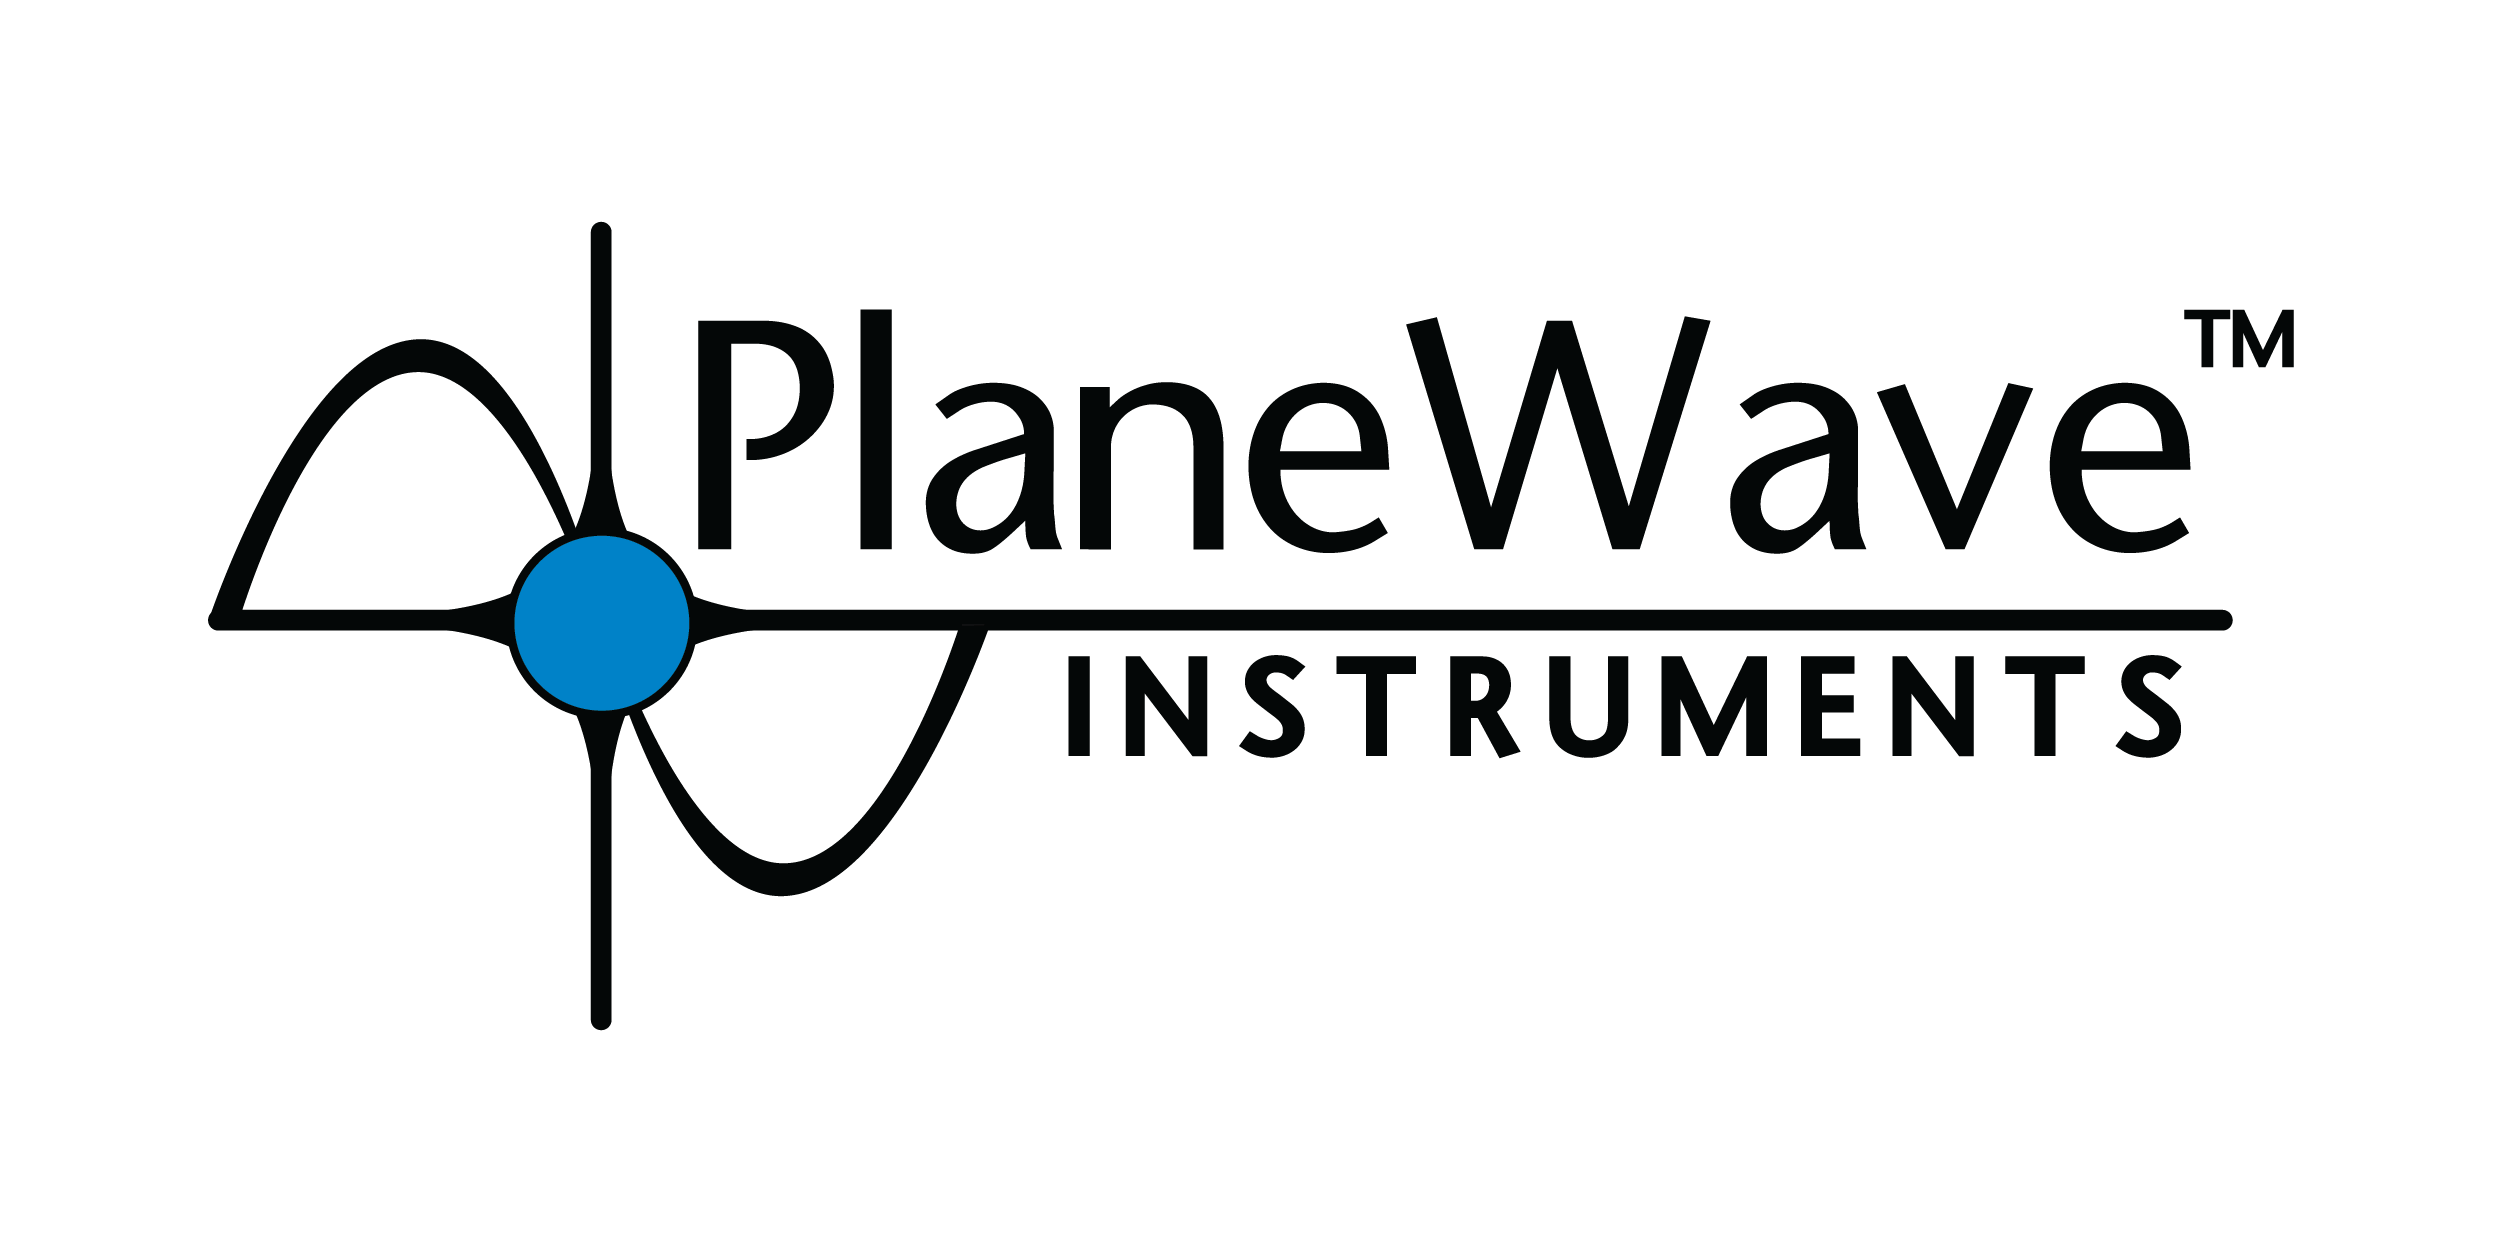 Planewave Instruments